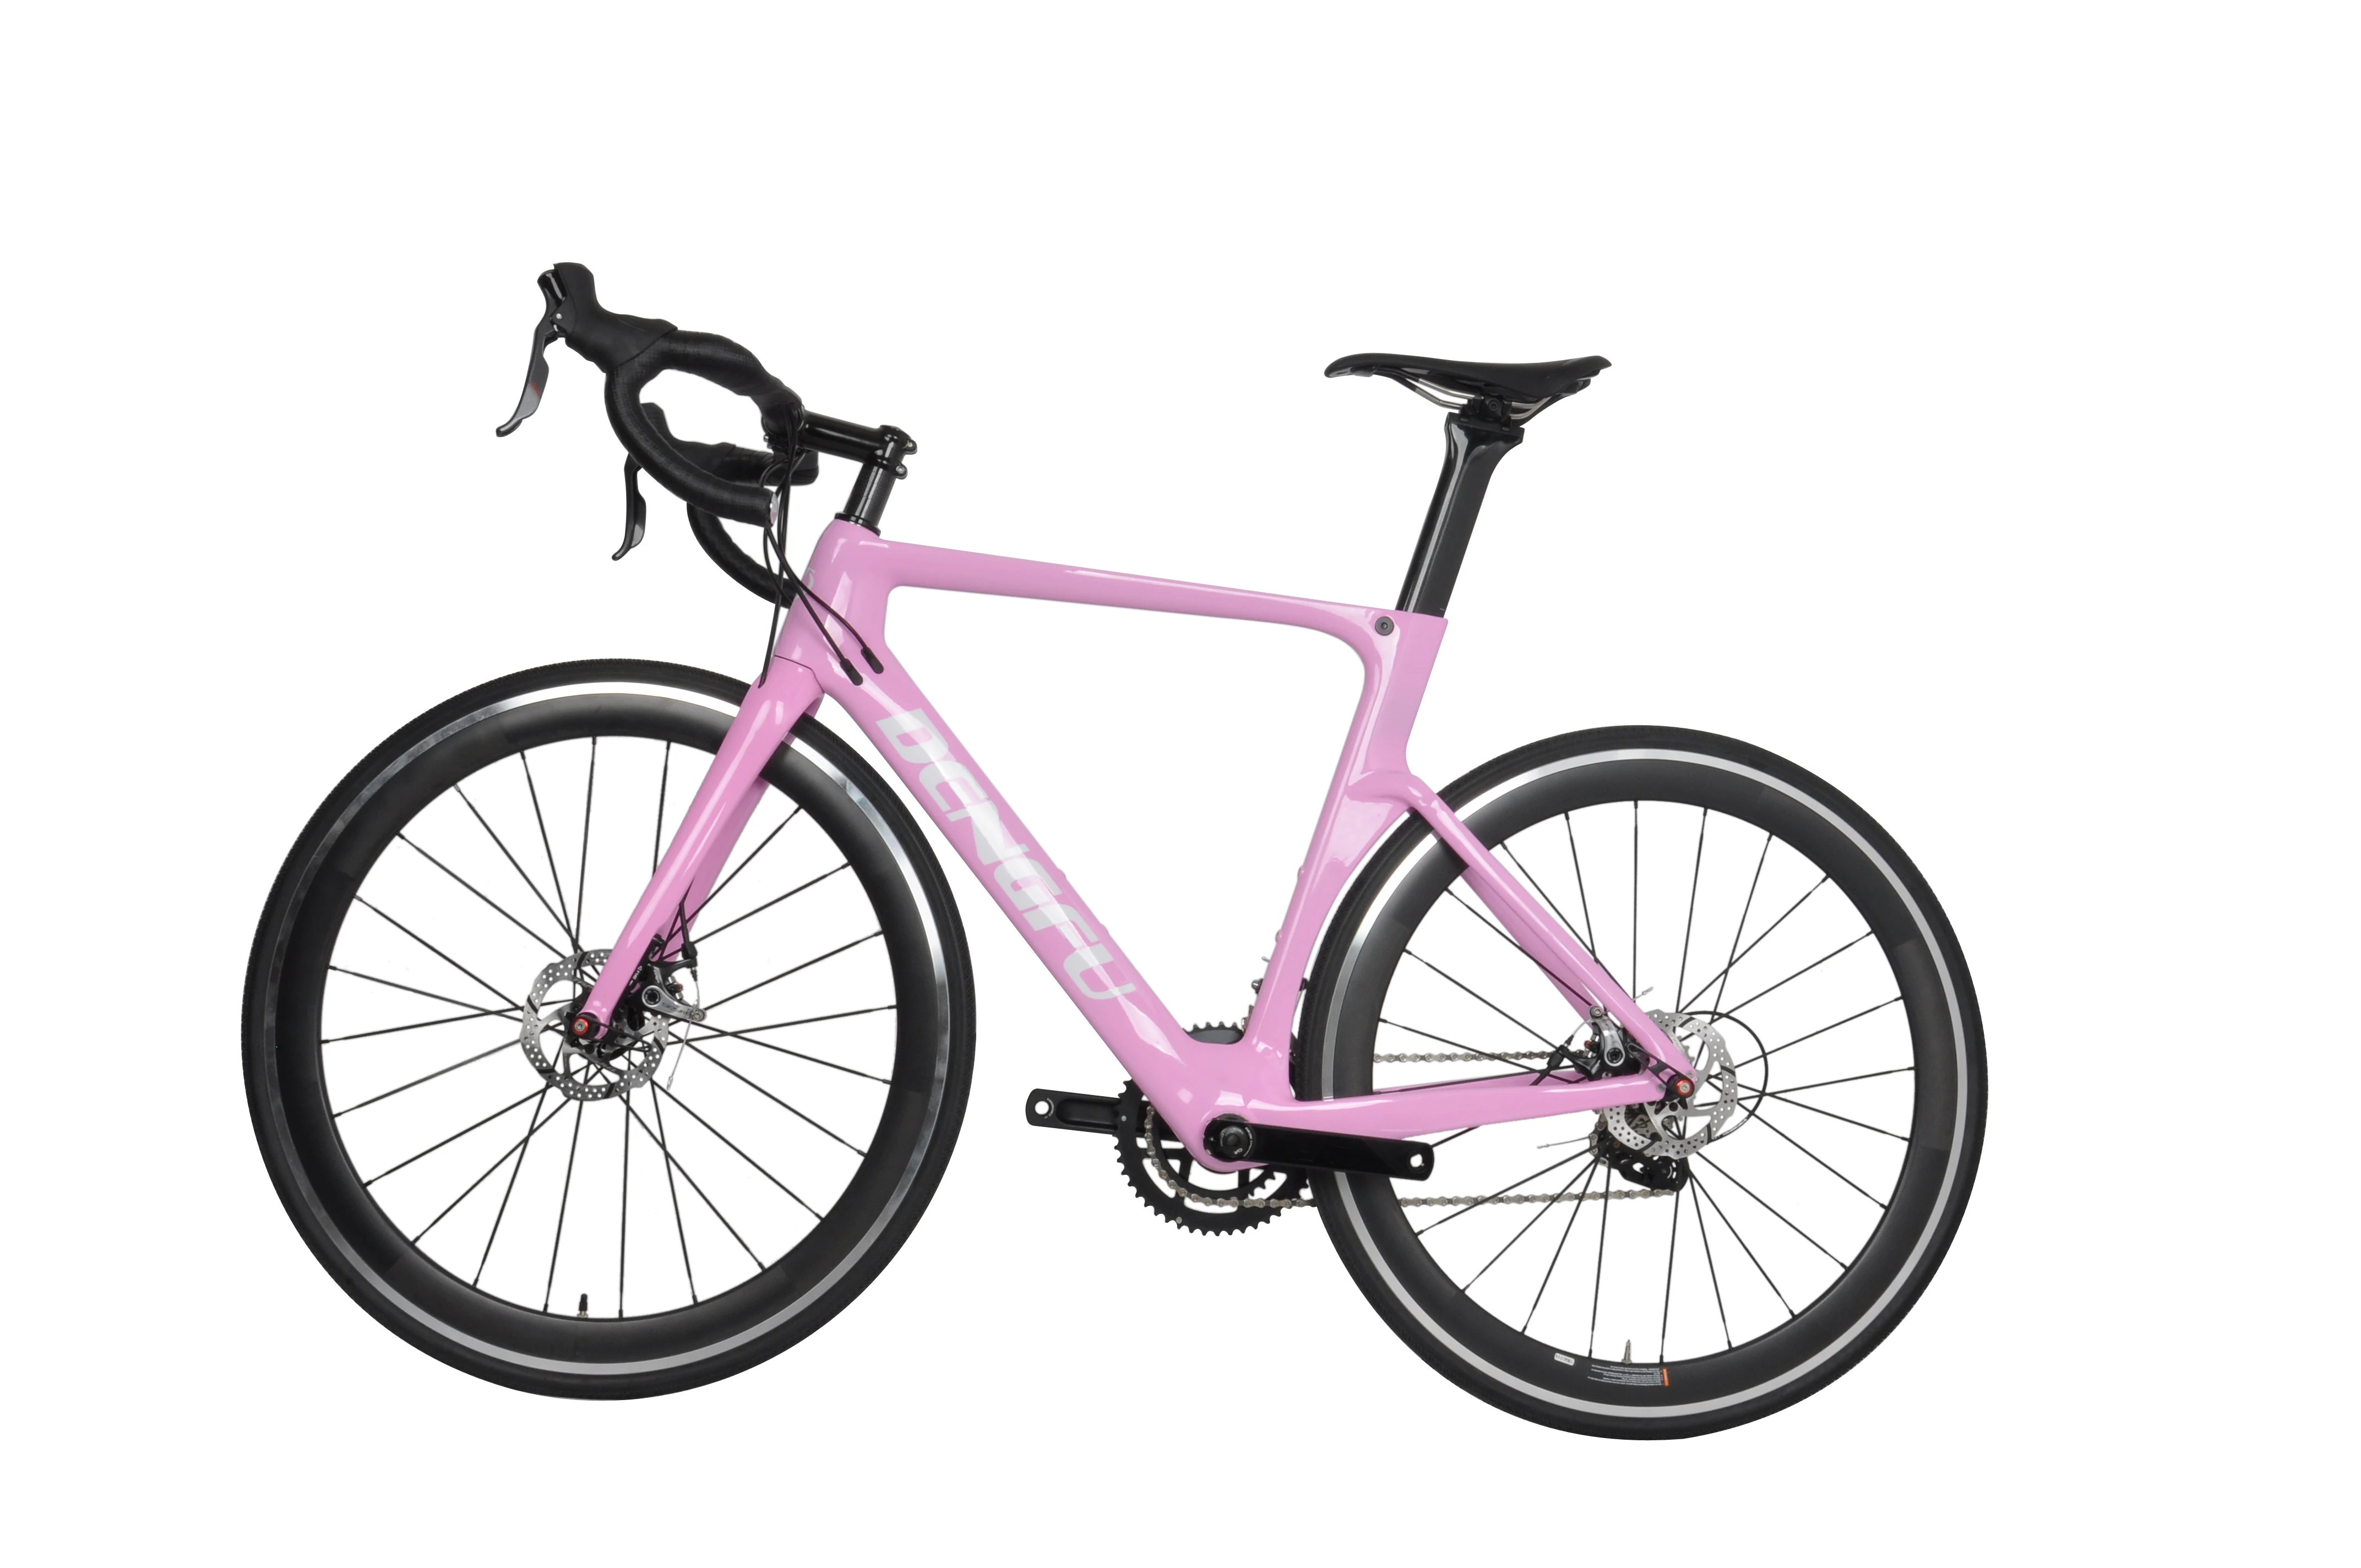 49cm Full Road Bike Carbon Disc Brake 700C Race Frame Alloy Wheels Clincher Pink 